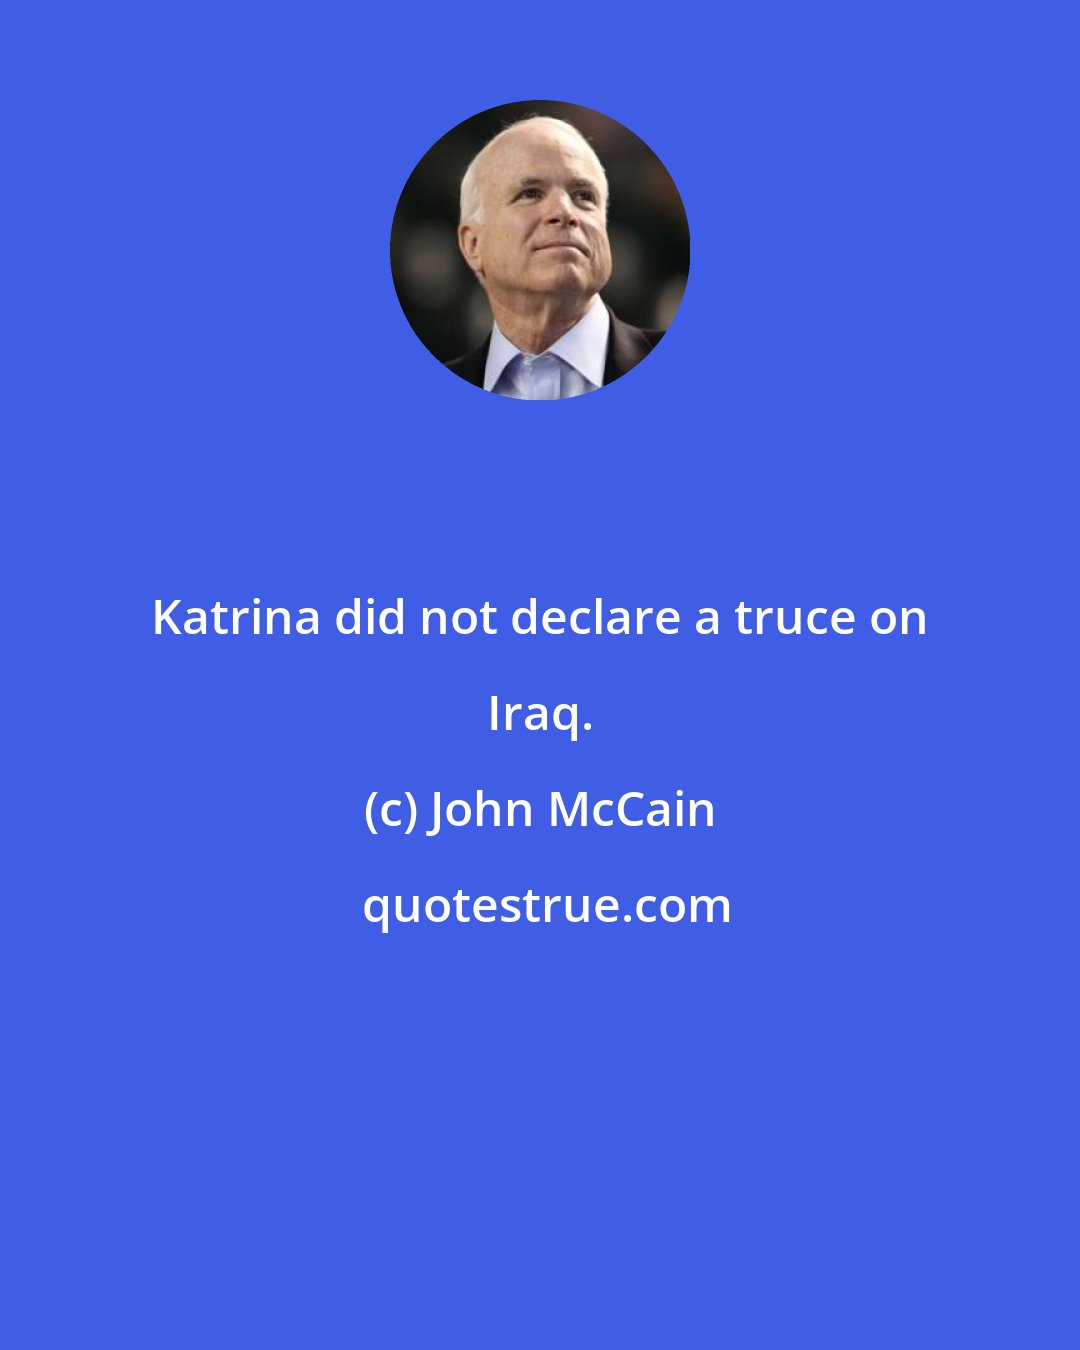 John McCain: Katrina did not declare a truce on Iraq.